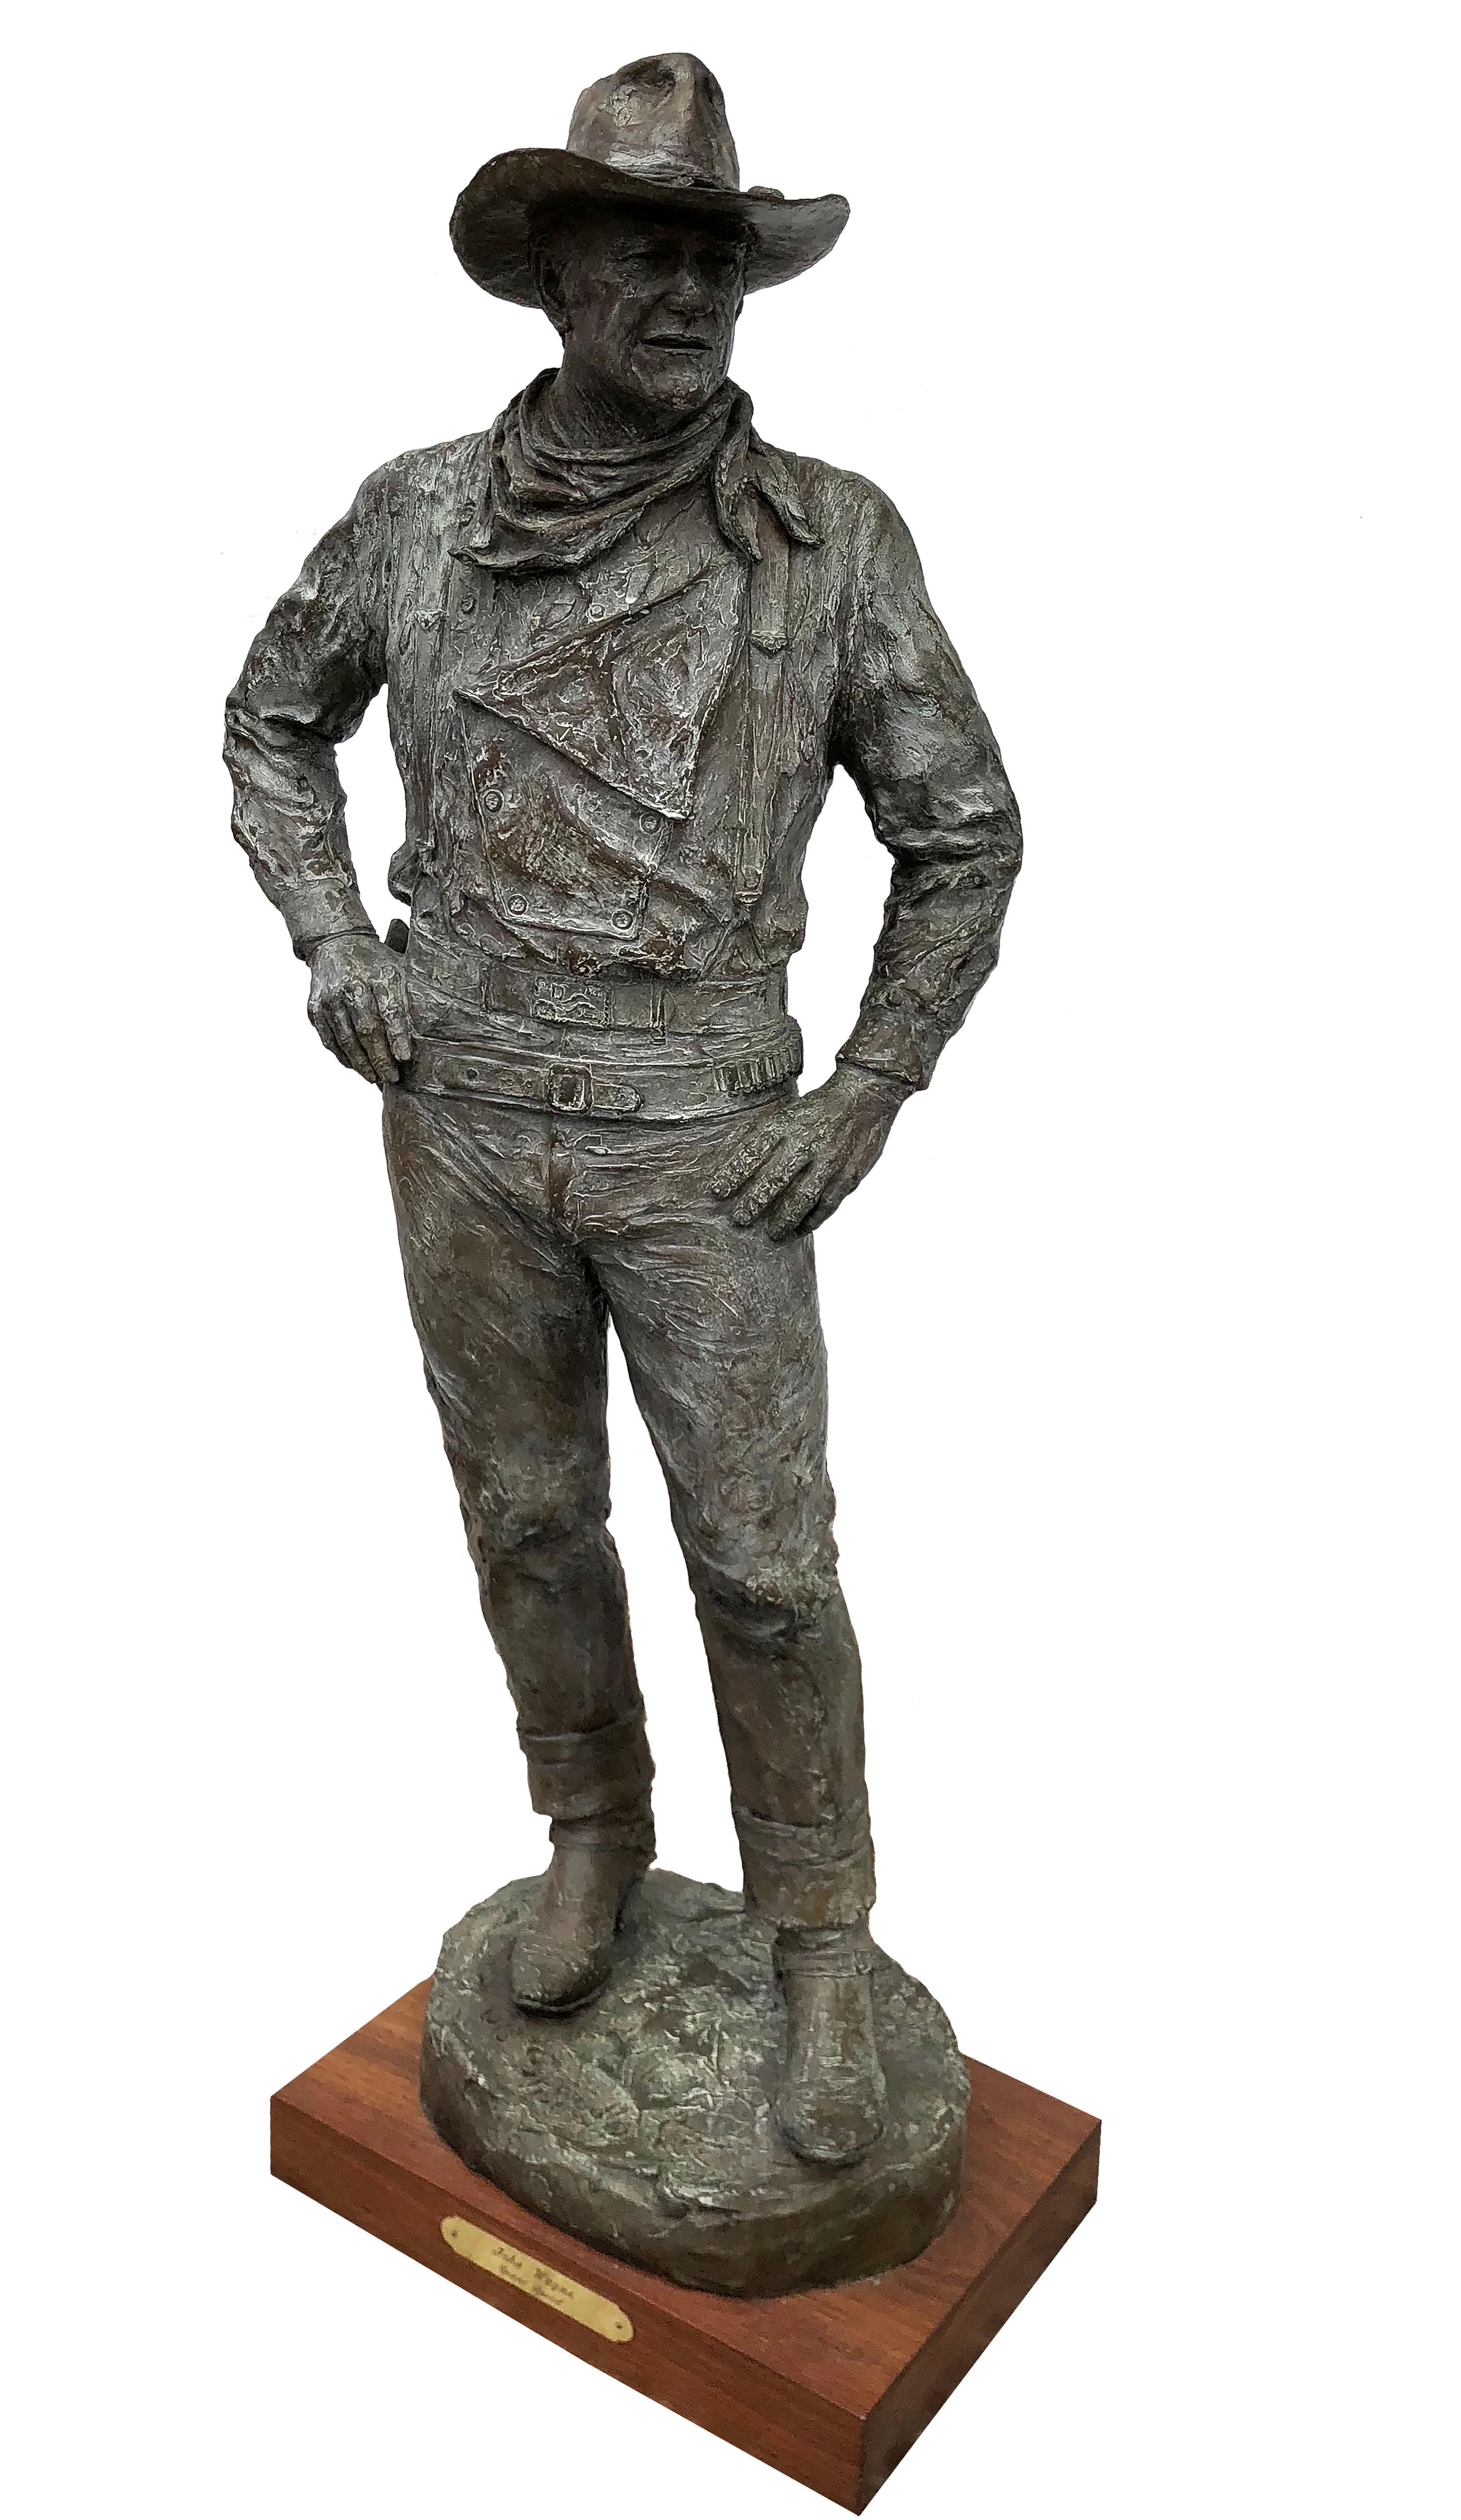 John Wayne - Sculpture by Grant Speed